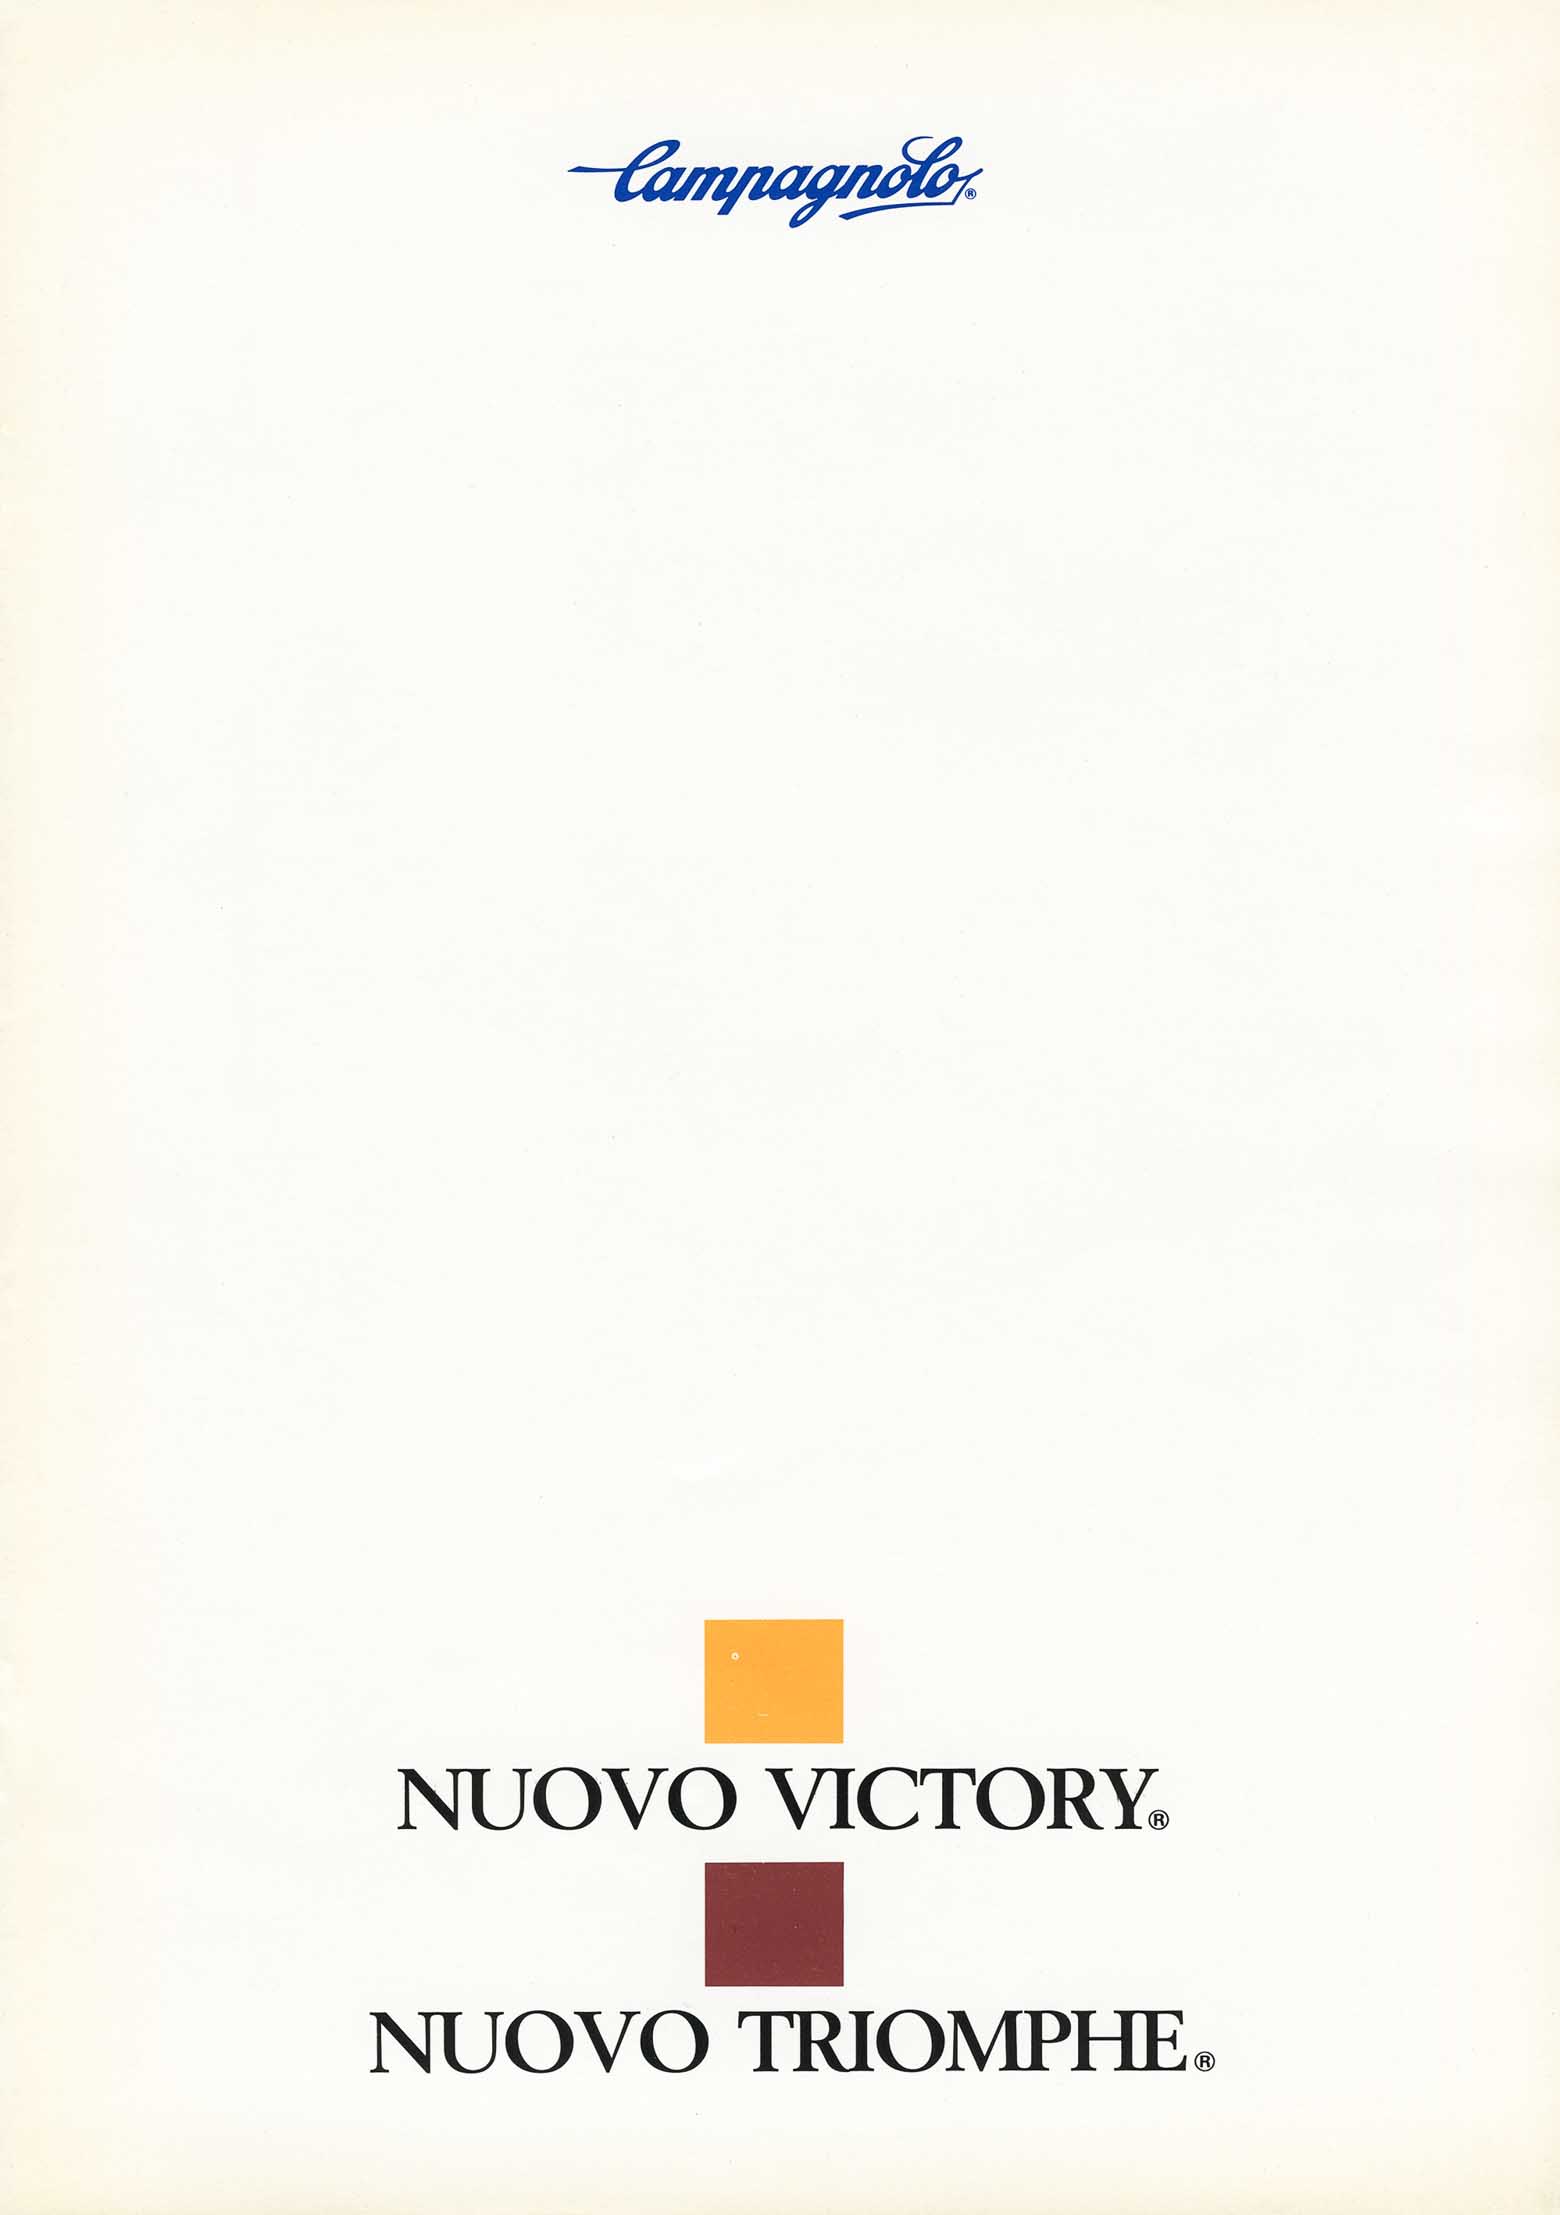 Campagnolo - Nuovo Victory, Nuovo Triomphe scan 01 main image